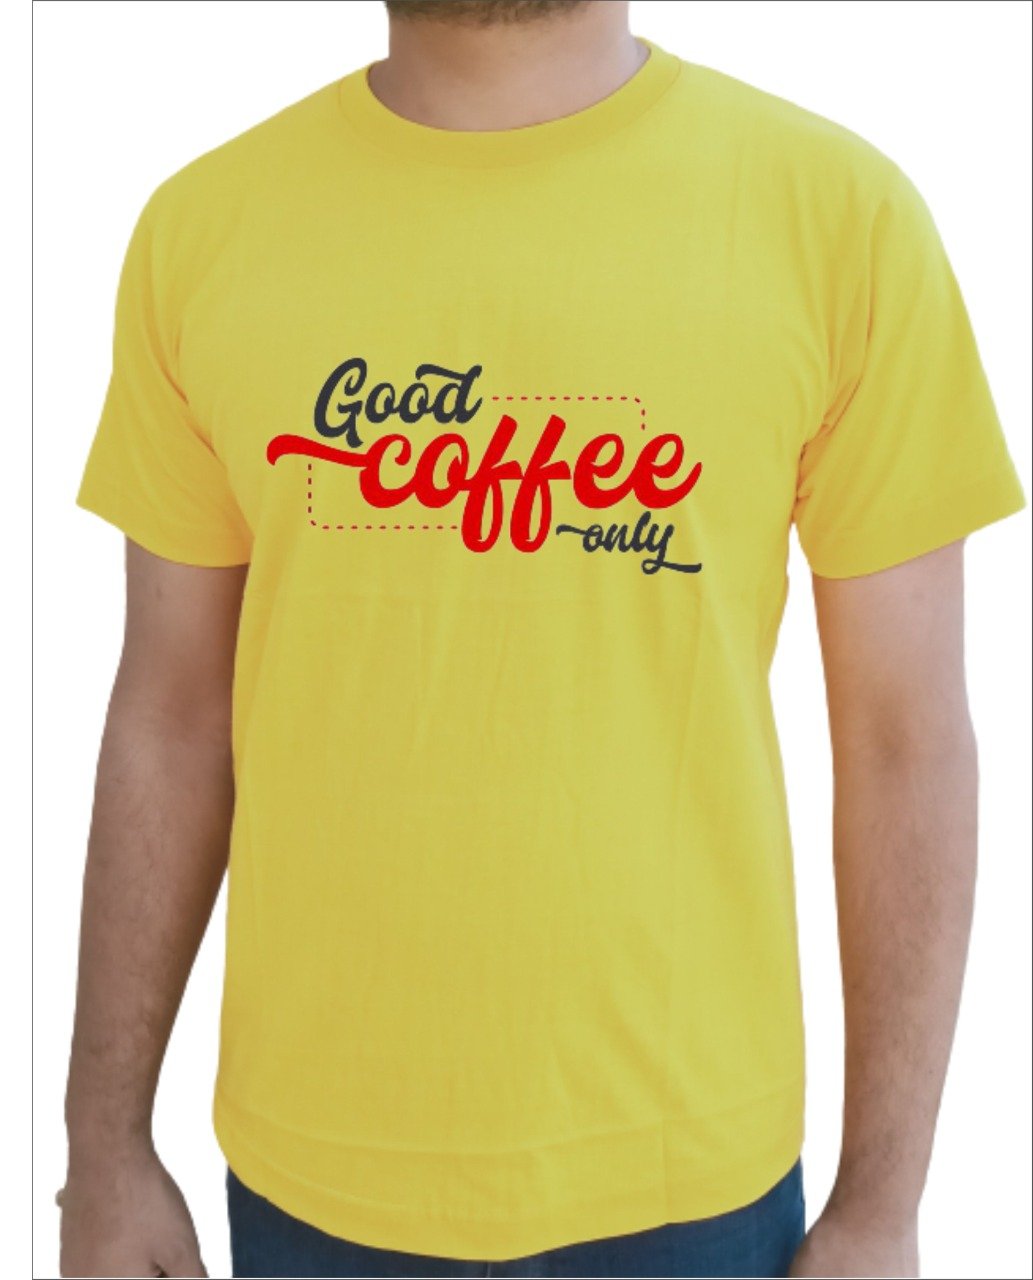 Good Coffee Only Half Sleeve T-Shirt Yellow